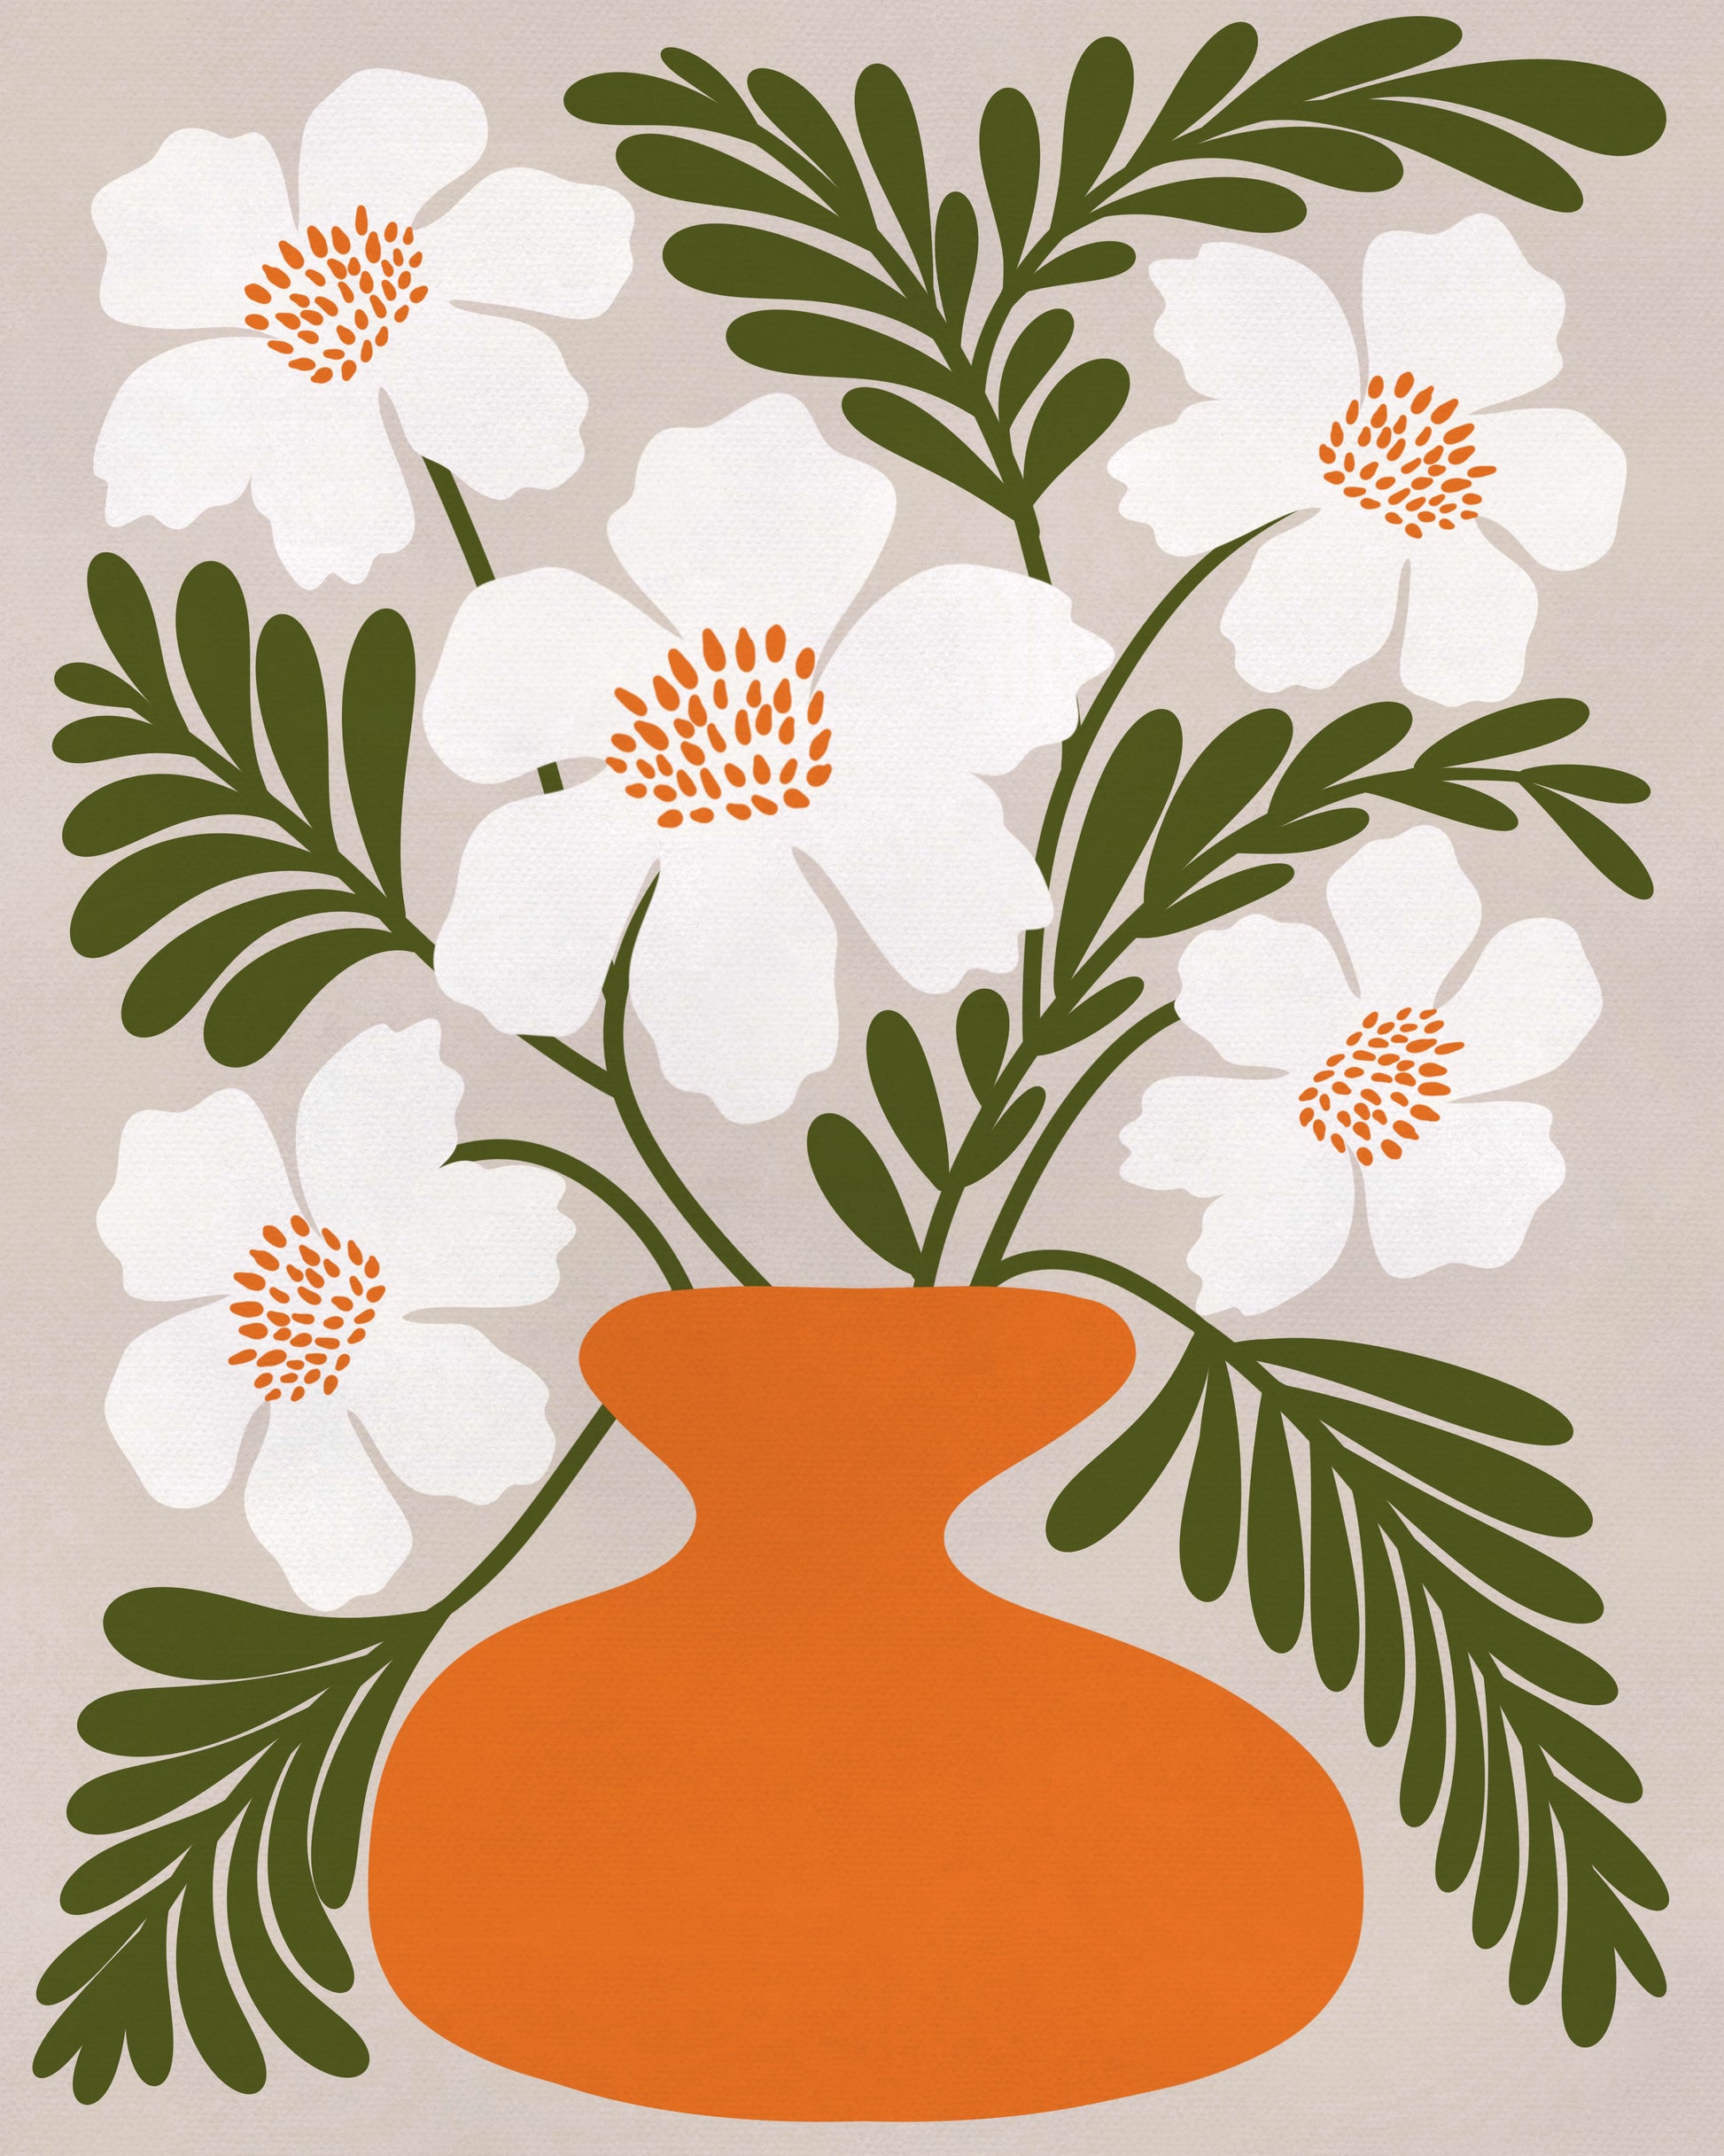 Bohemisk Blomster Poster | Retro Floral Illustration av Tove Malm, Tove Malm Studio